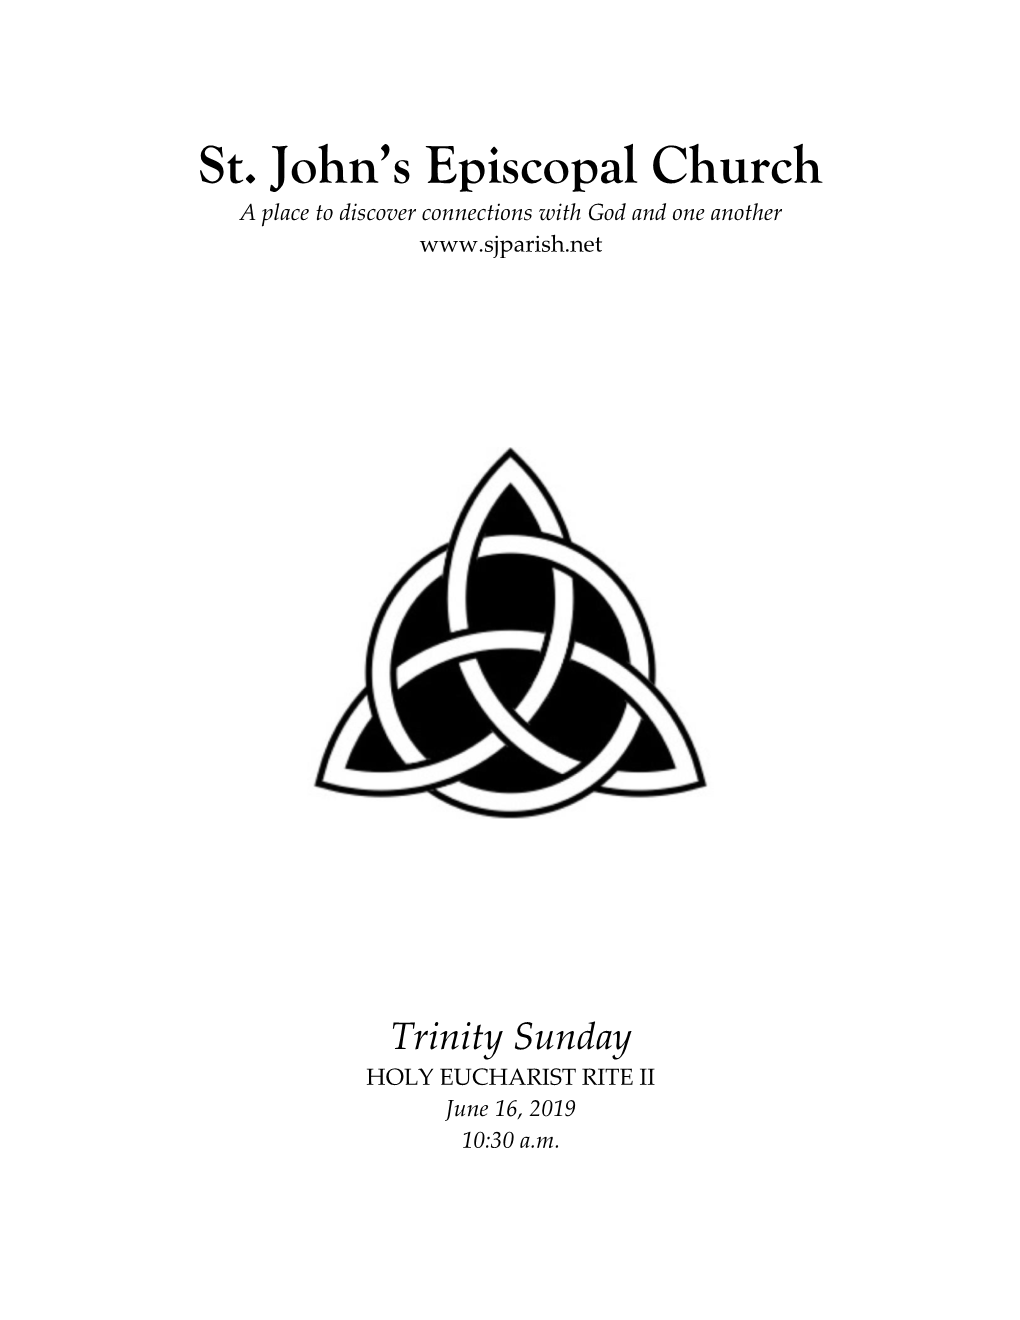 Trinity Sunday HOLY EUCHARIST RITE II June 16, 2019 10:30 A.M